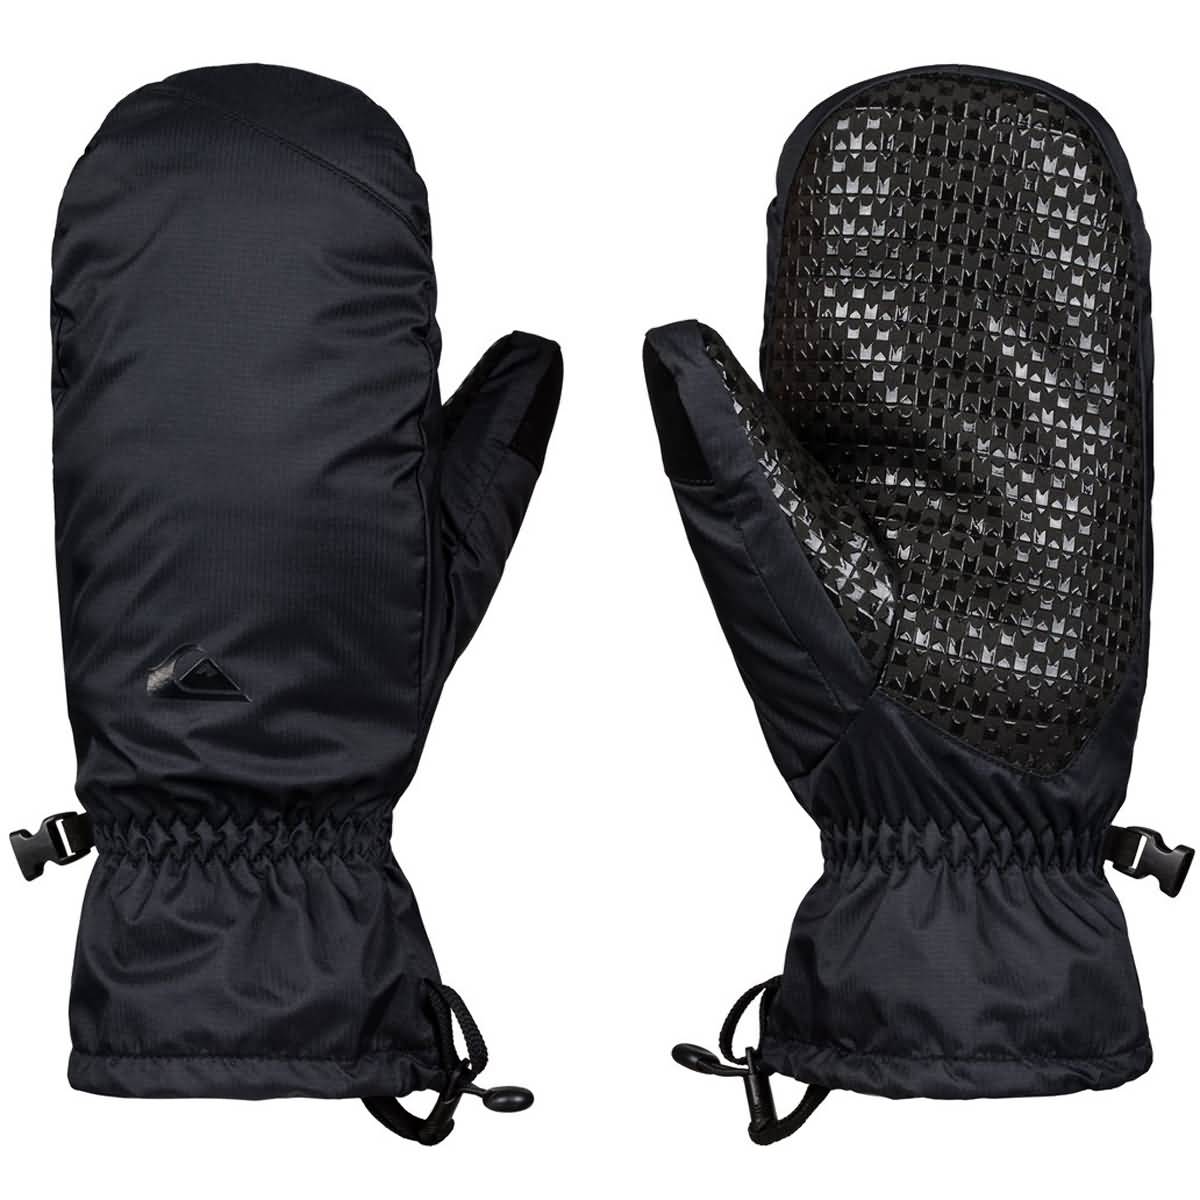 Quiksilver Lenticular 3-in-1 Men's Snow Gloves - Black